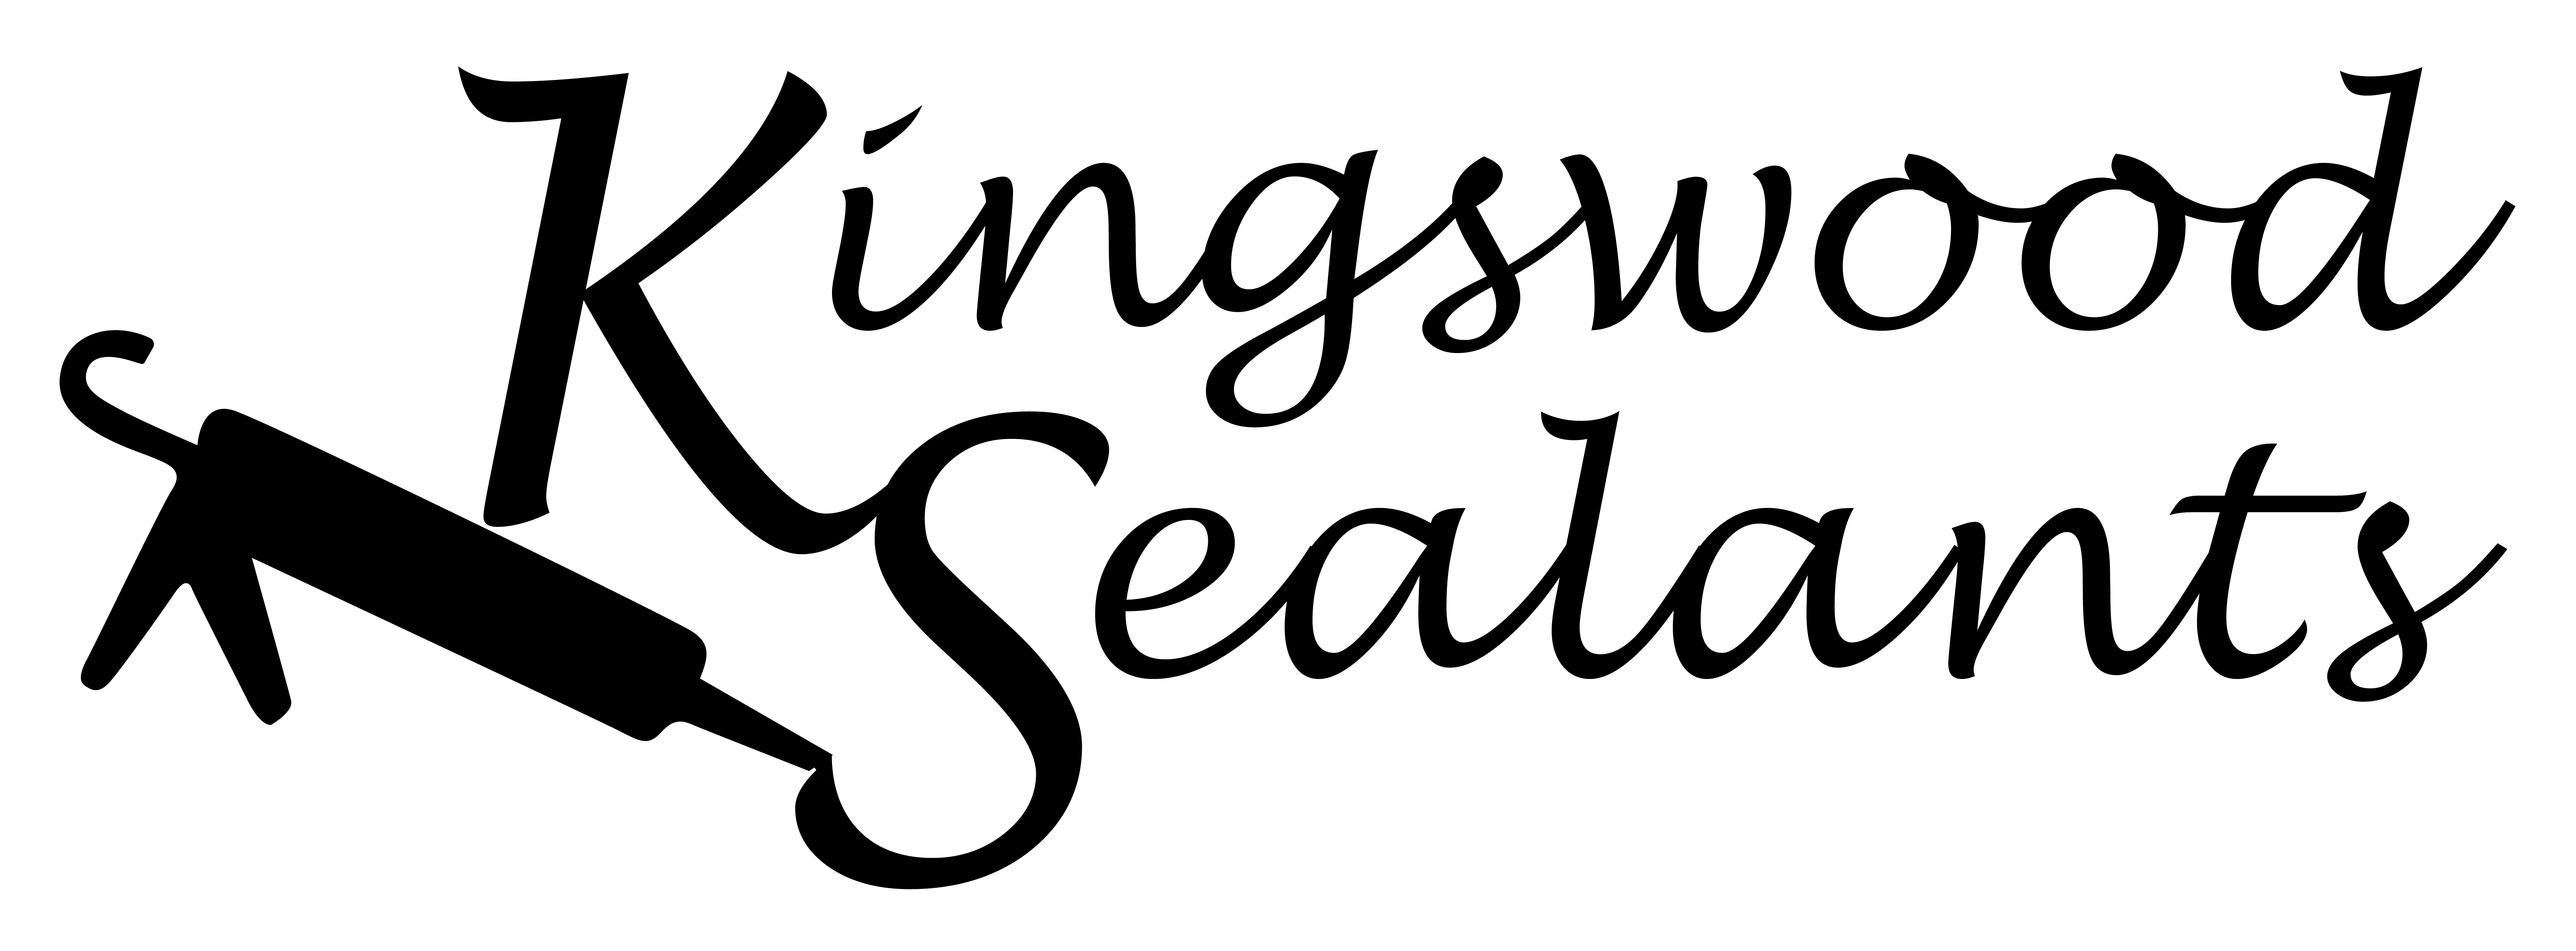 Kingswood Sealants LTD logo without slogan